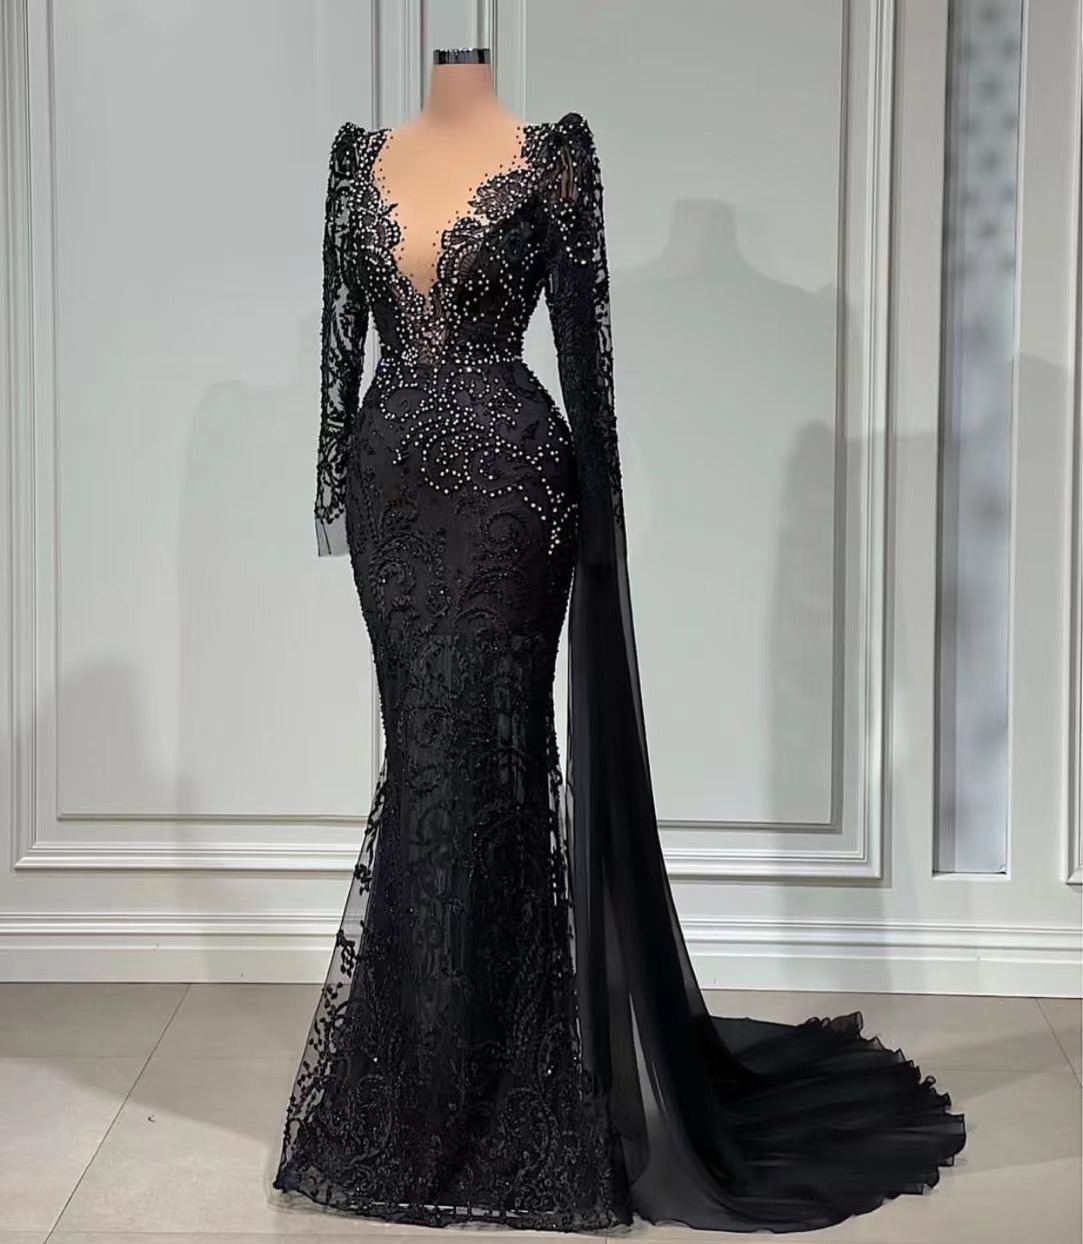 Modest Black Evening Dresses Long Sleeve Lace Applique Beaded Mermaid Elegant Vintage Evening Gown Formal Party Dresses Vestidos De Fiesta